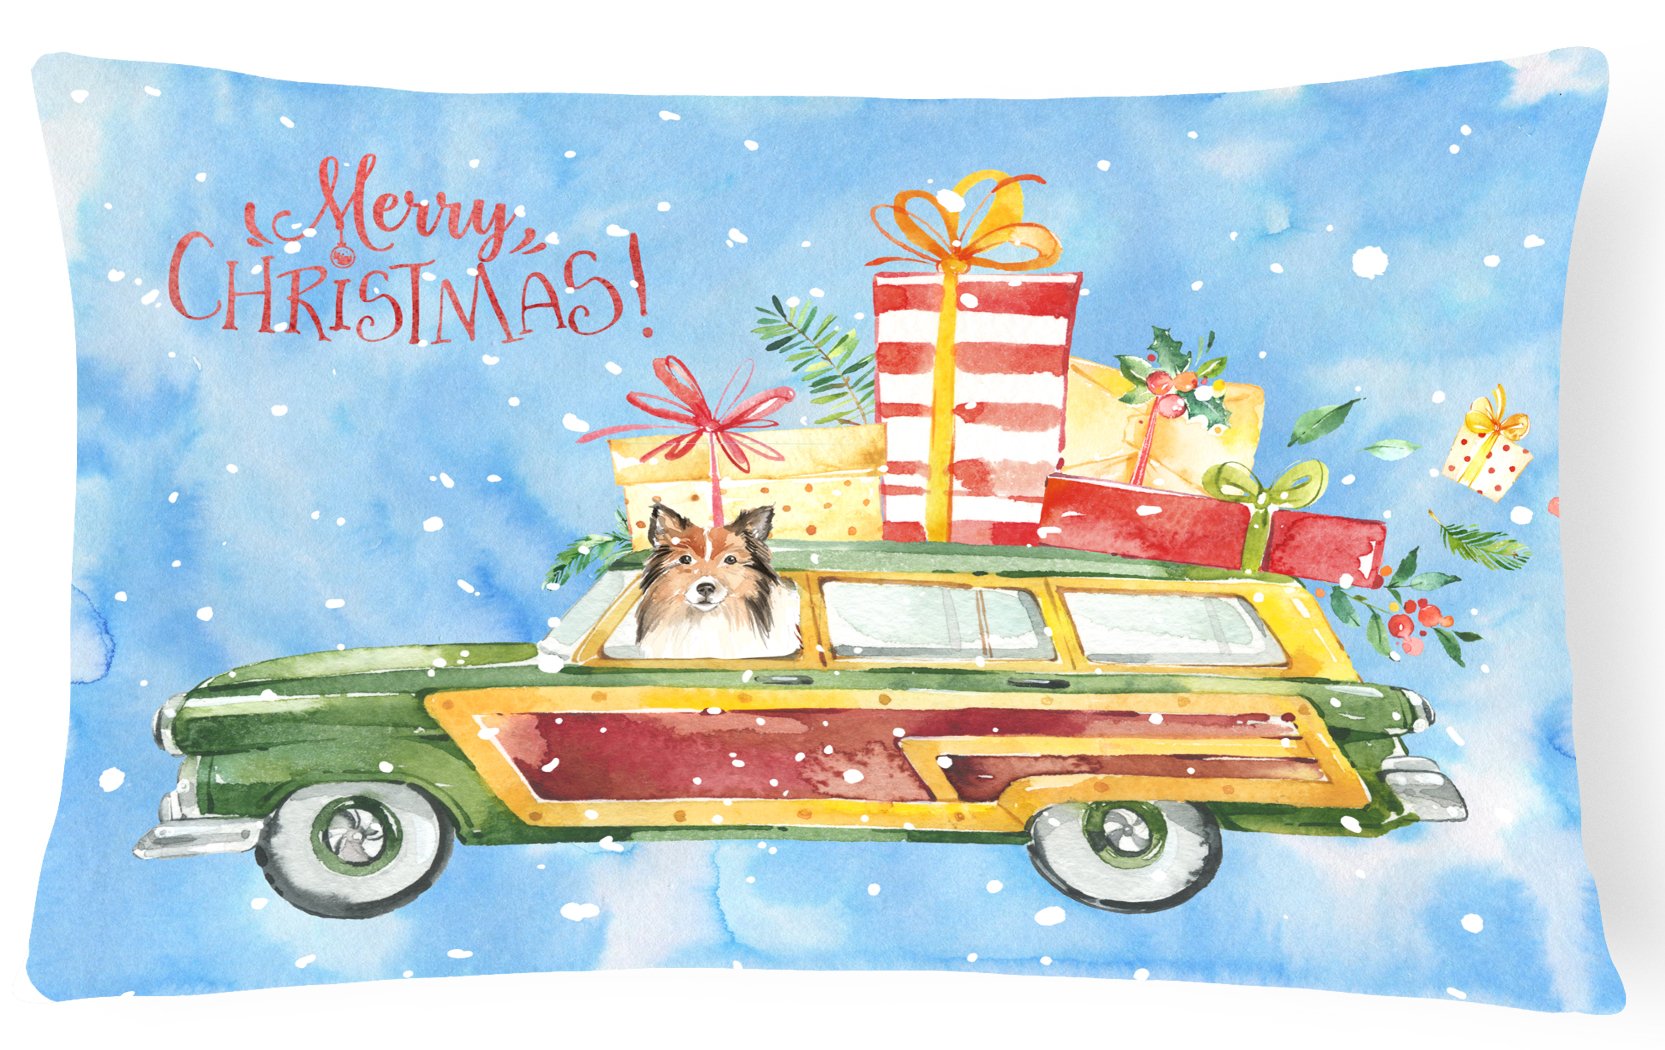 Merry Christmas Sheltie Canvas Fabric Decorative Pillow CK2421PW1216 by Caroline's Treasures